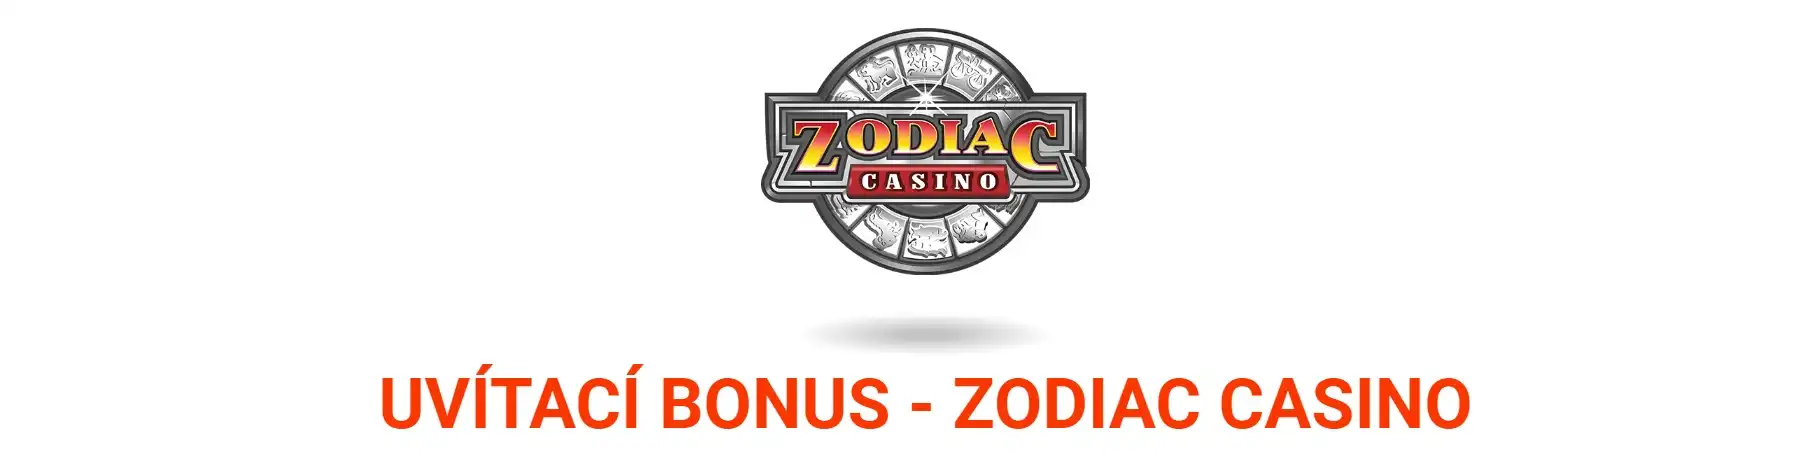 Zodiac Casino Uvitaci Bonus